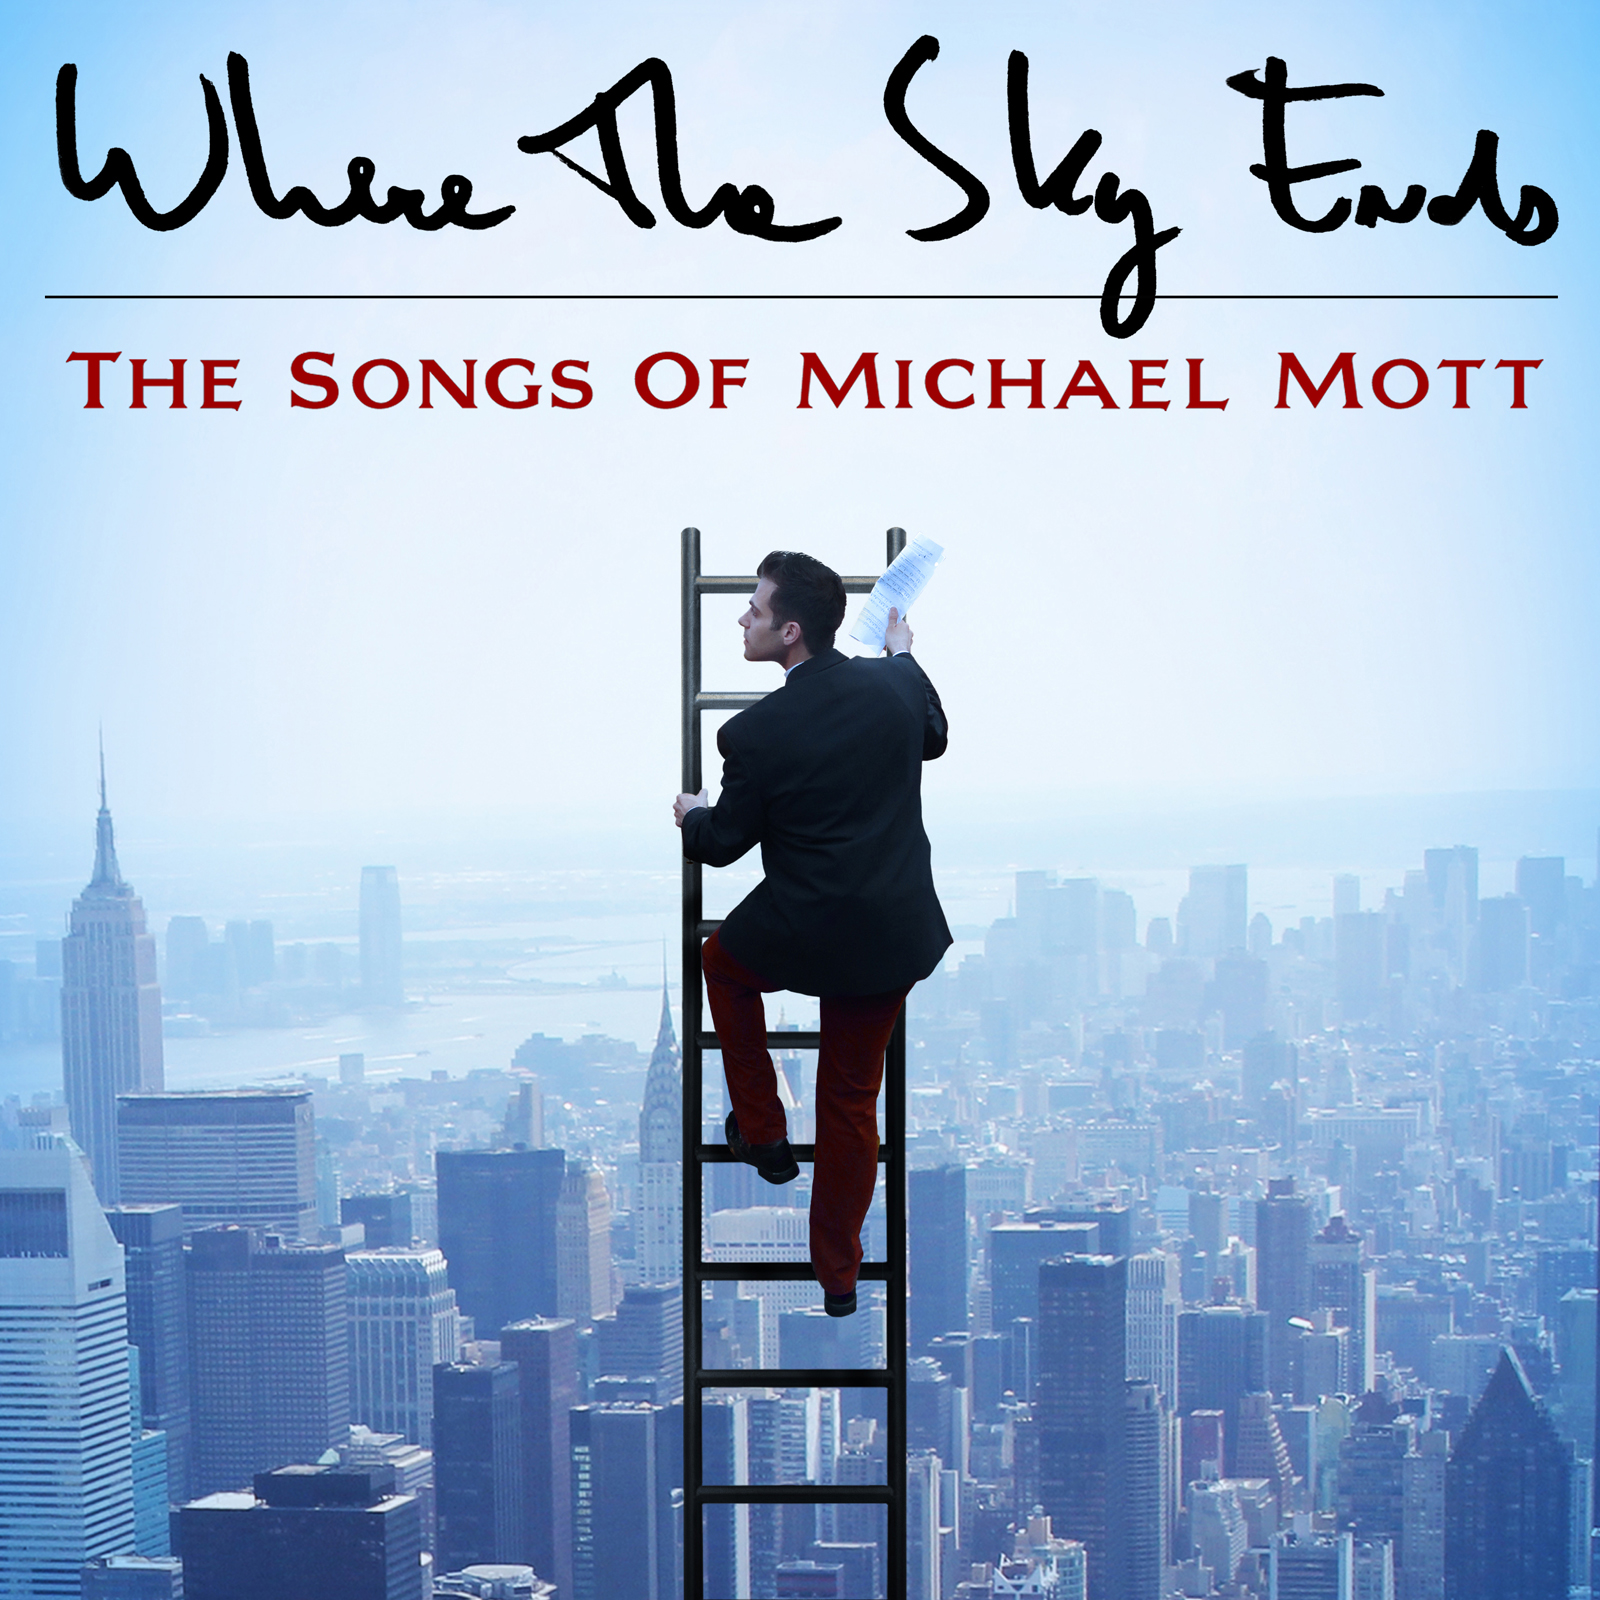 Where The Sky Ends: The Music of Michael Mott - Various Artists Album